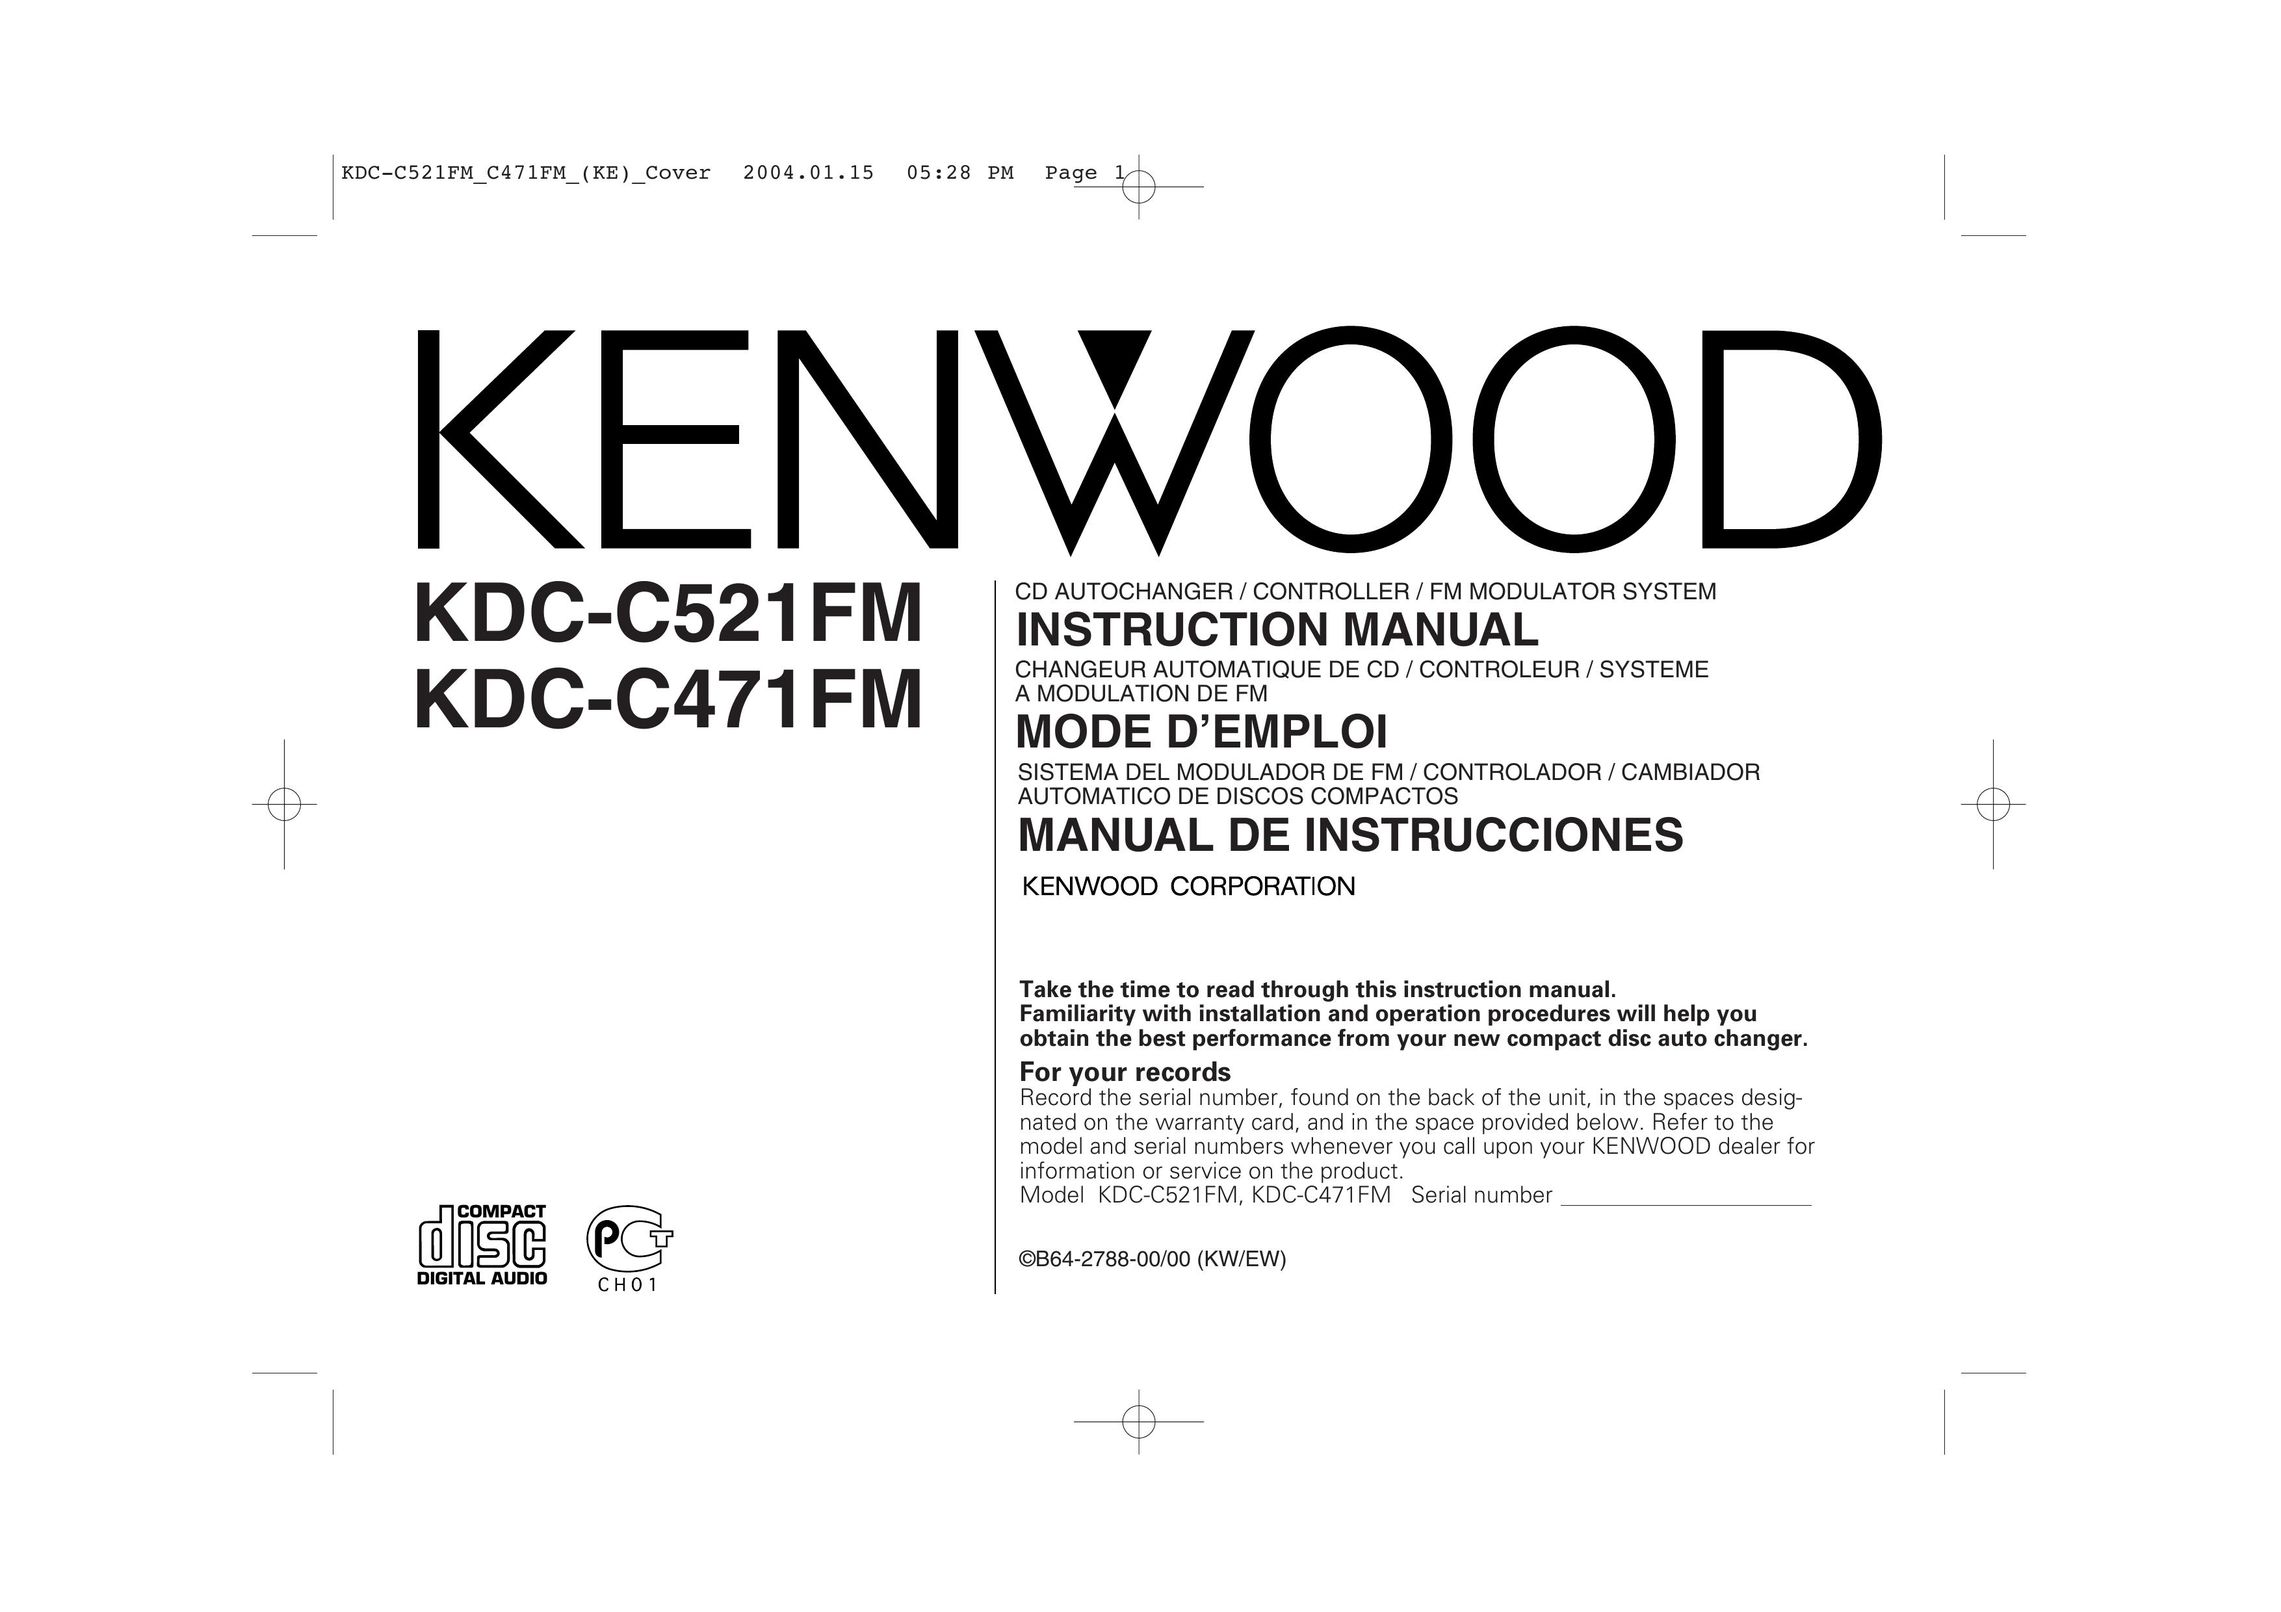 Kenwood C471FM CD Player User Manual